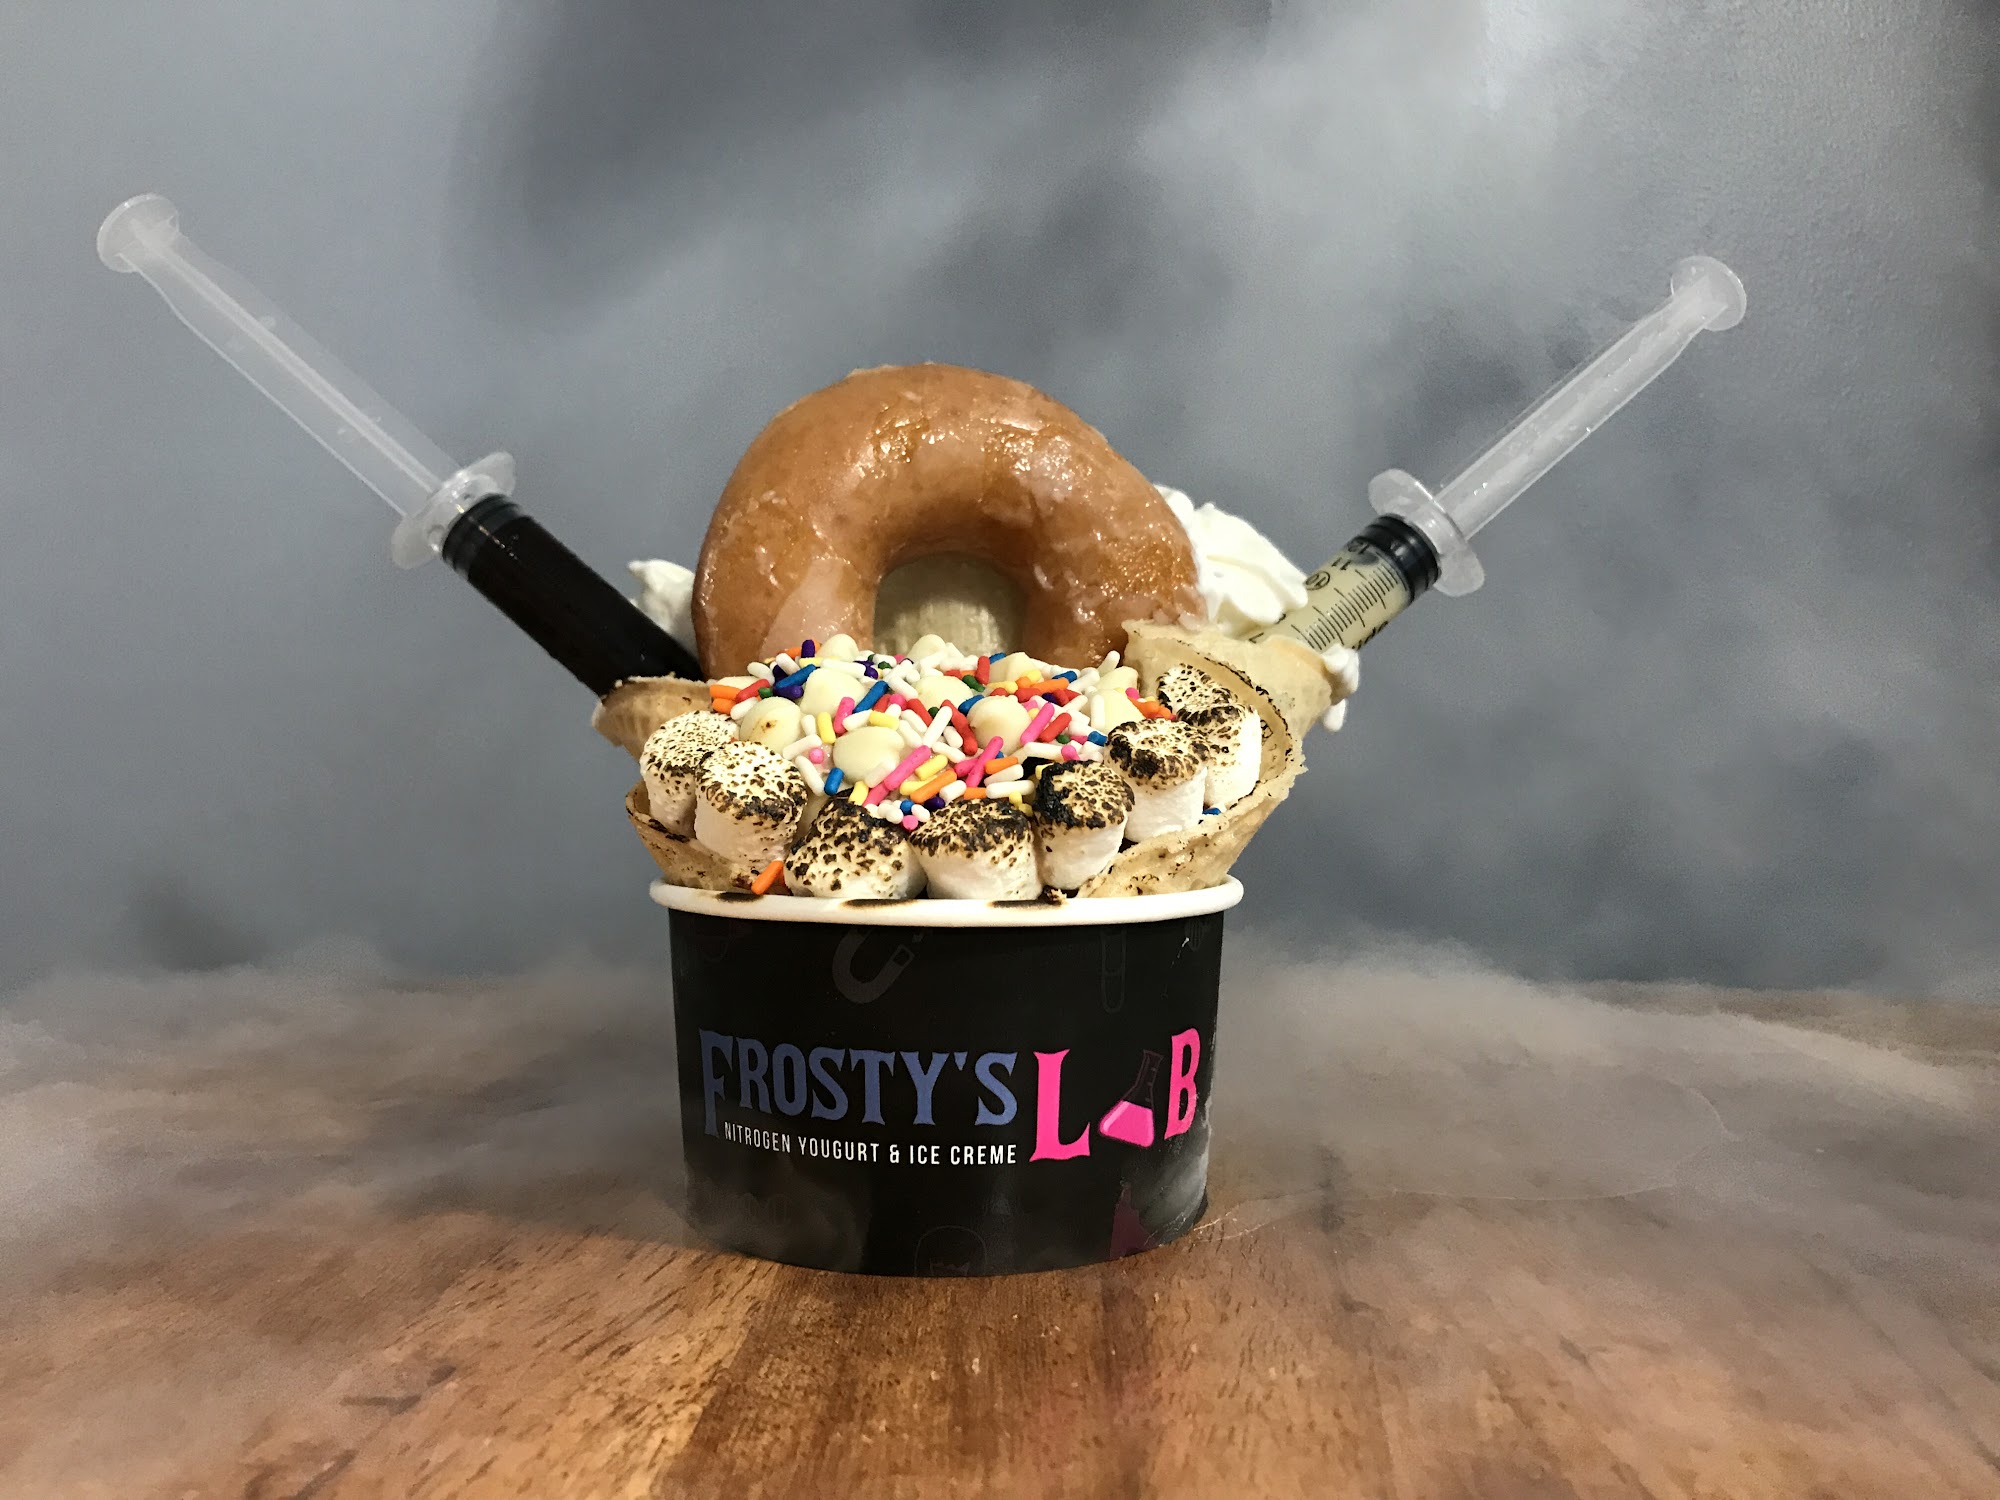 Frosty's Lab Nitrogen Yogurt & Ice Cream